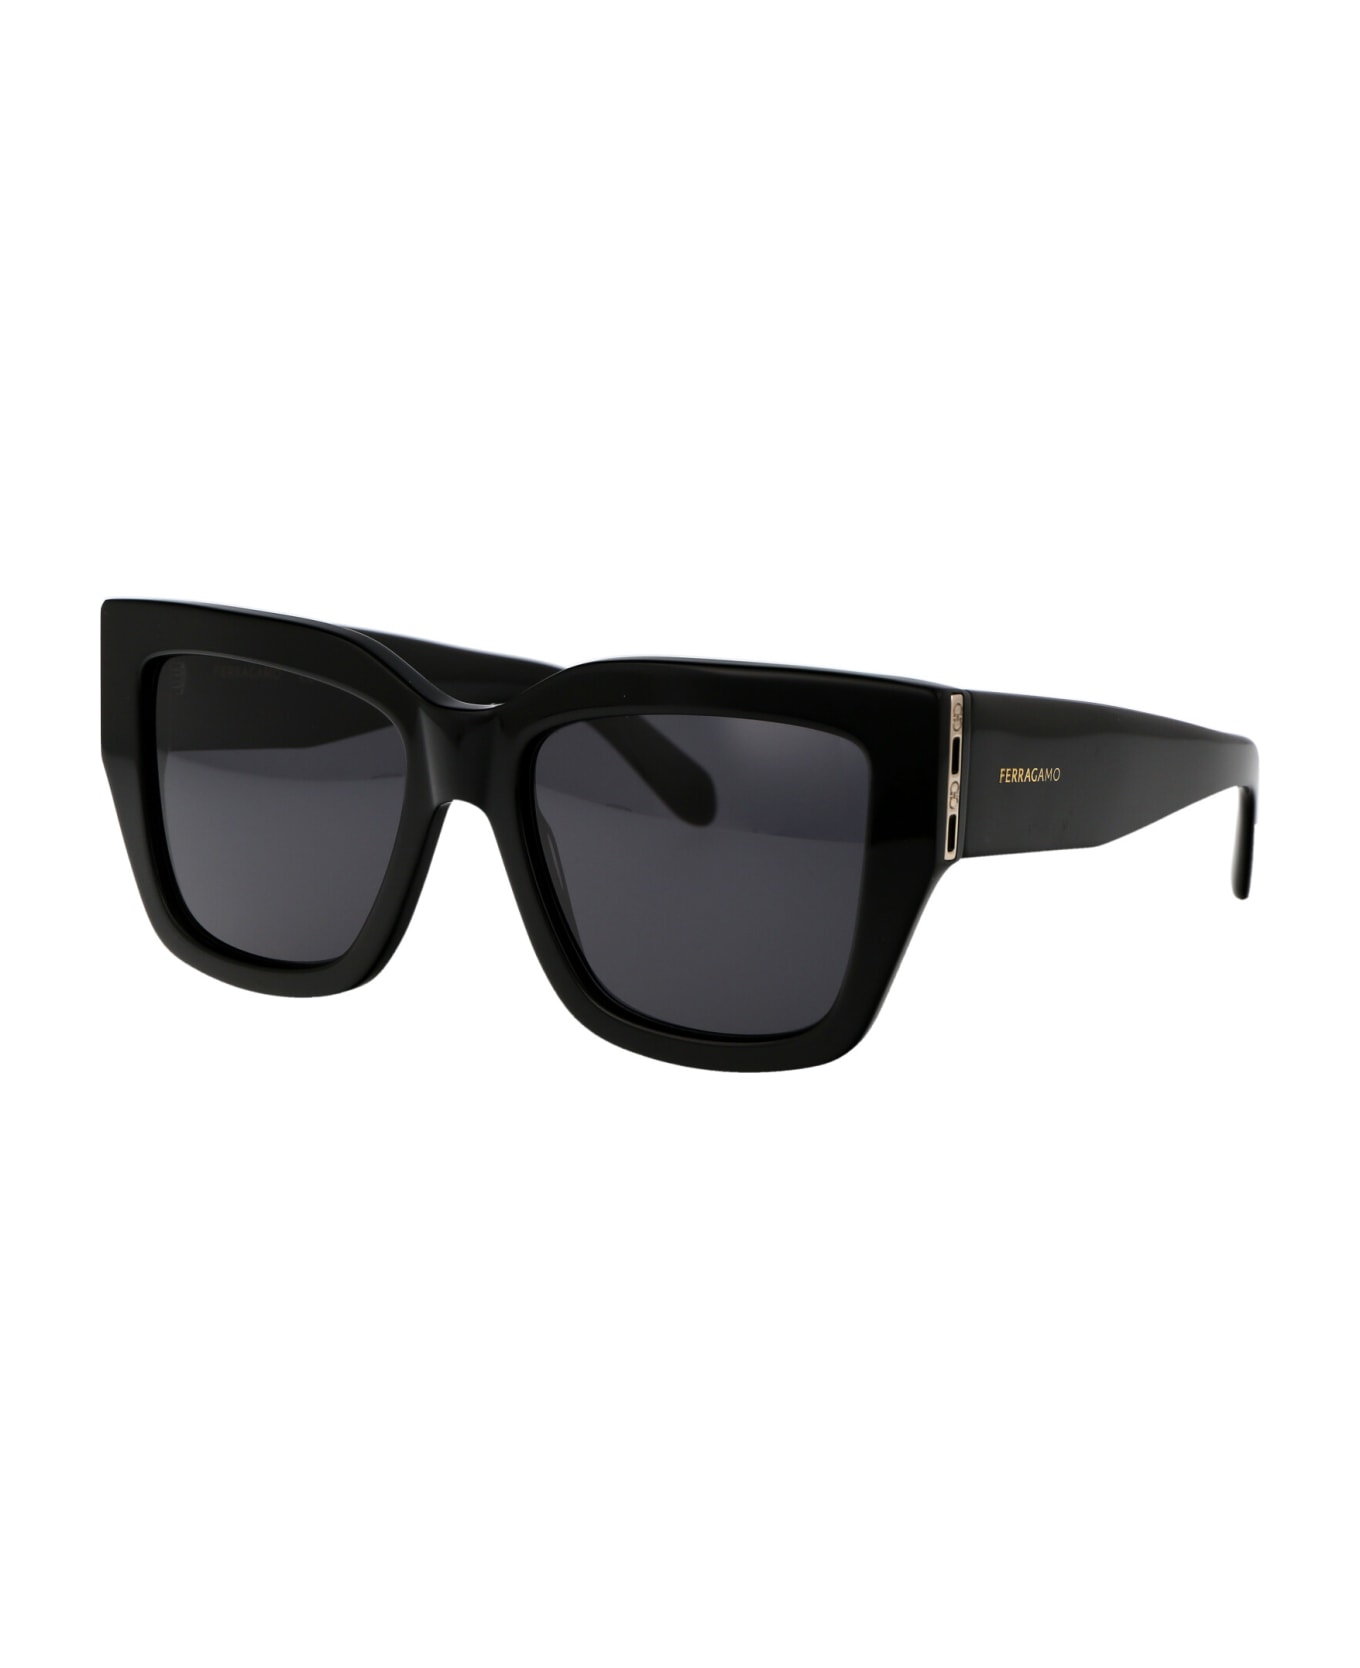 Salvatore Ferragamo Eyewear Sf1104s Sunglasses - 001 BLACK